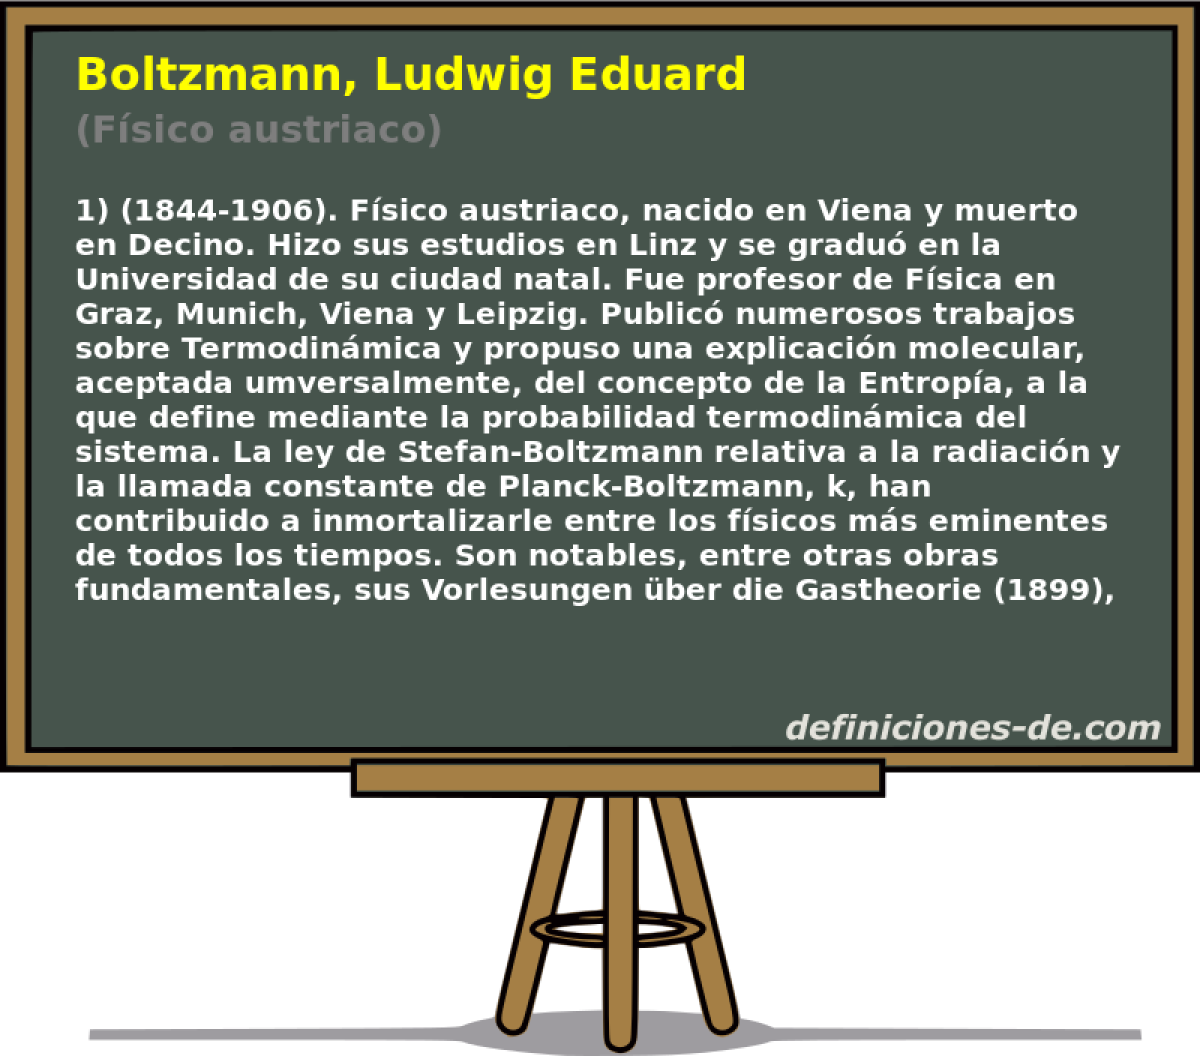 Boltzmann, Ludwig Eduard (Fsico austriaco)